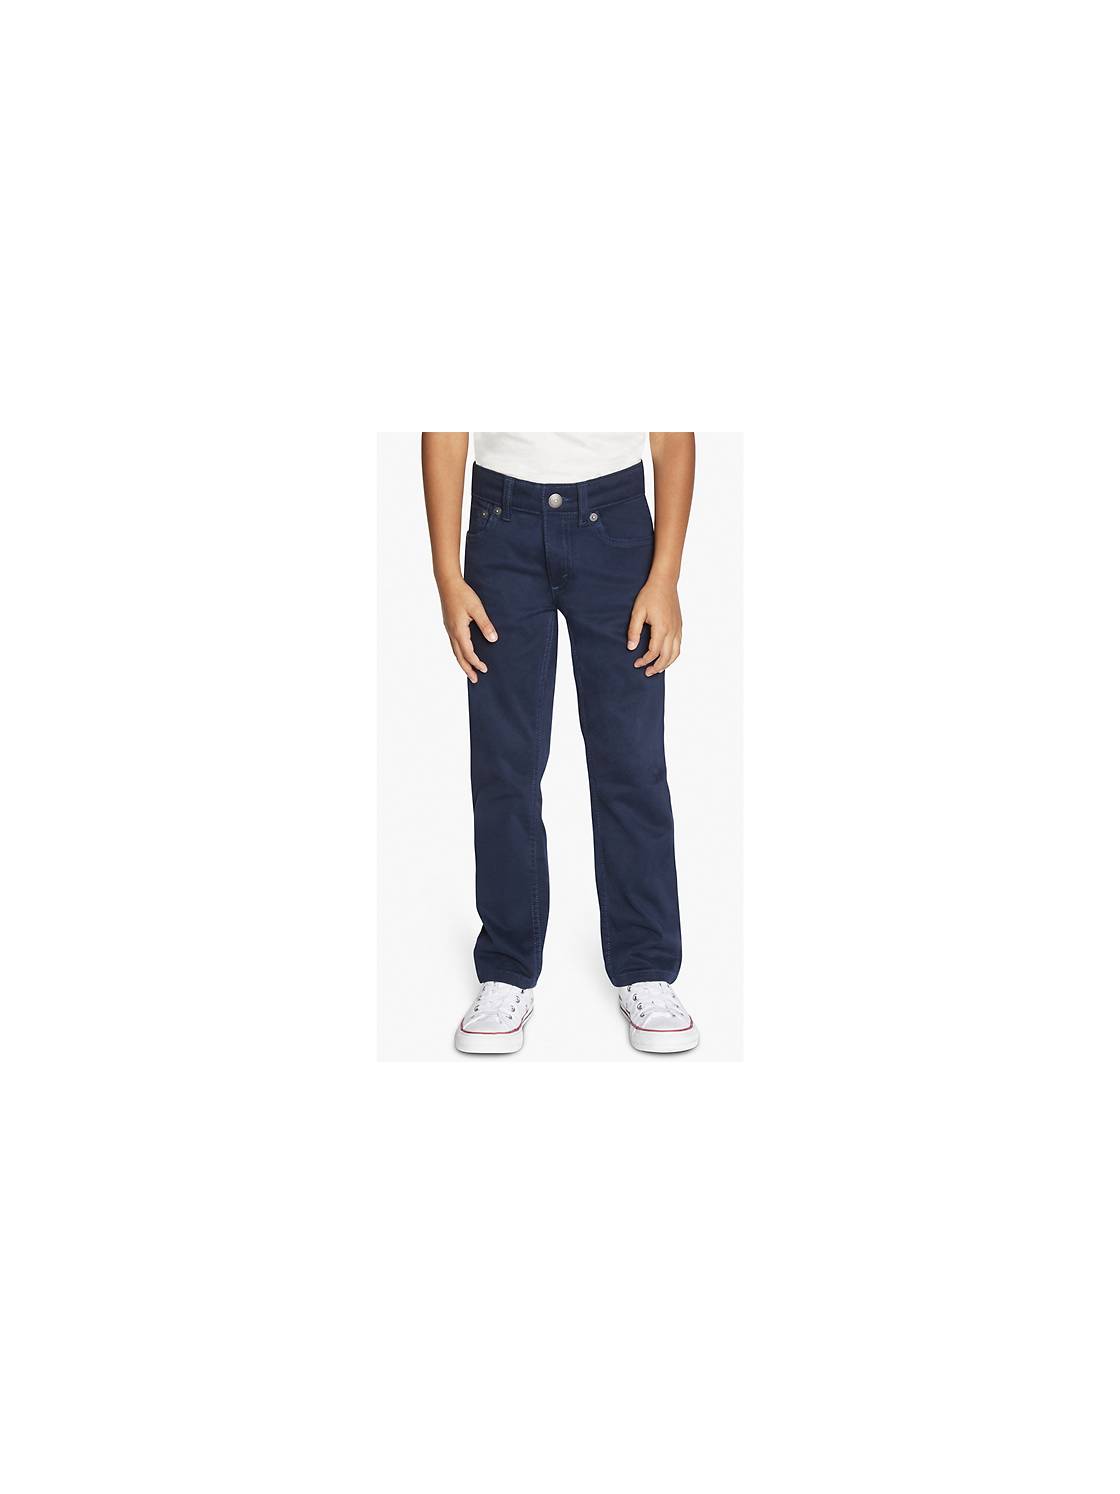 Levi's Boys' Regular Taper Fit Jeans, Sizes 4-20 